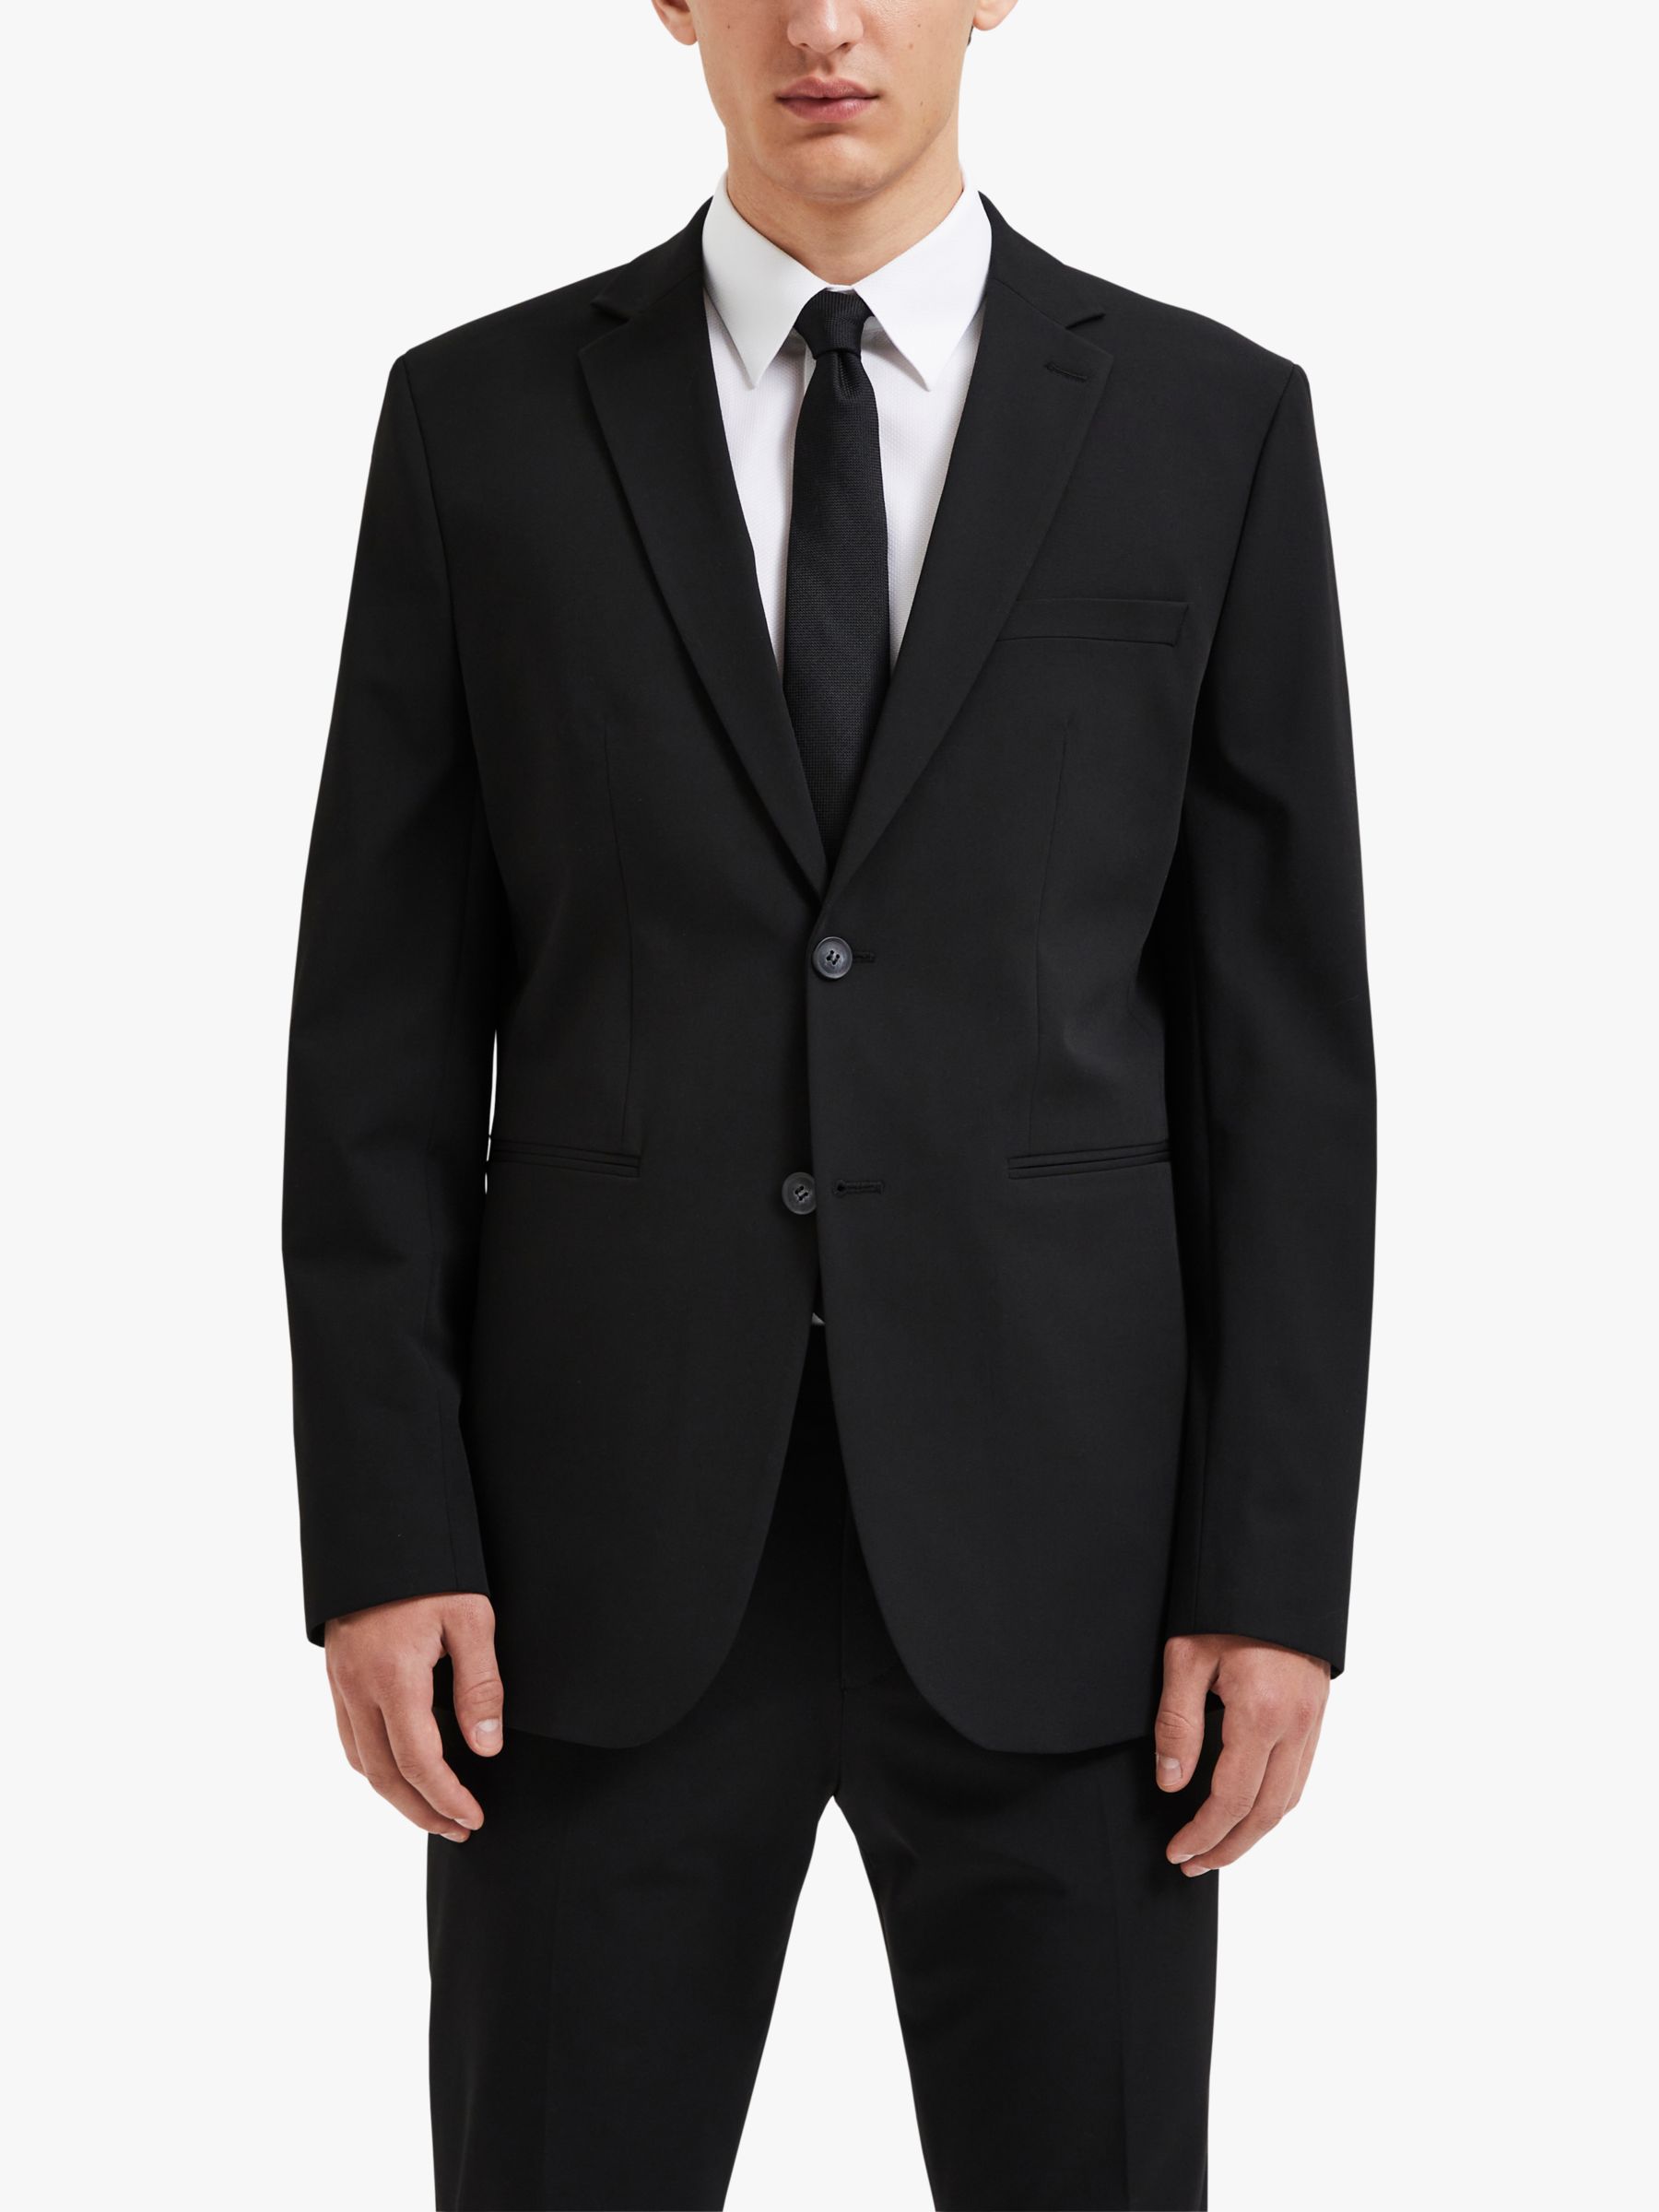 Buy SELECTED HOMME Slim Fit Suit Jacket, Black Online at johnlewis.com